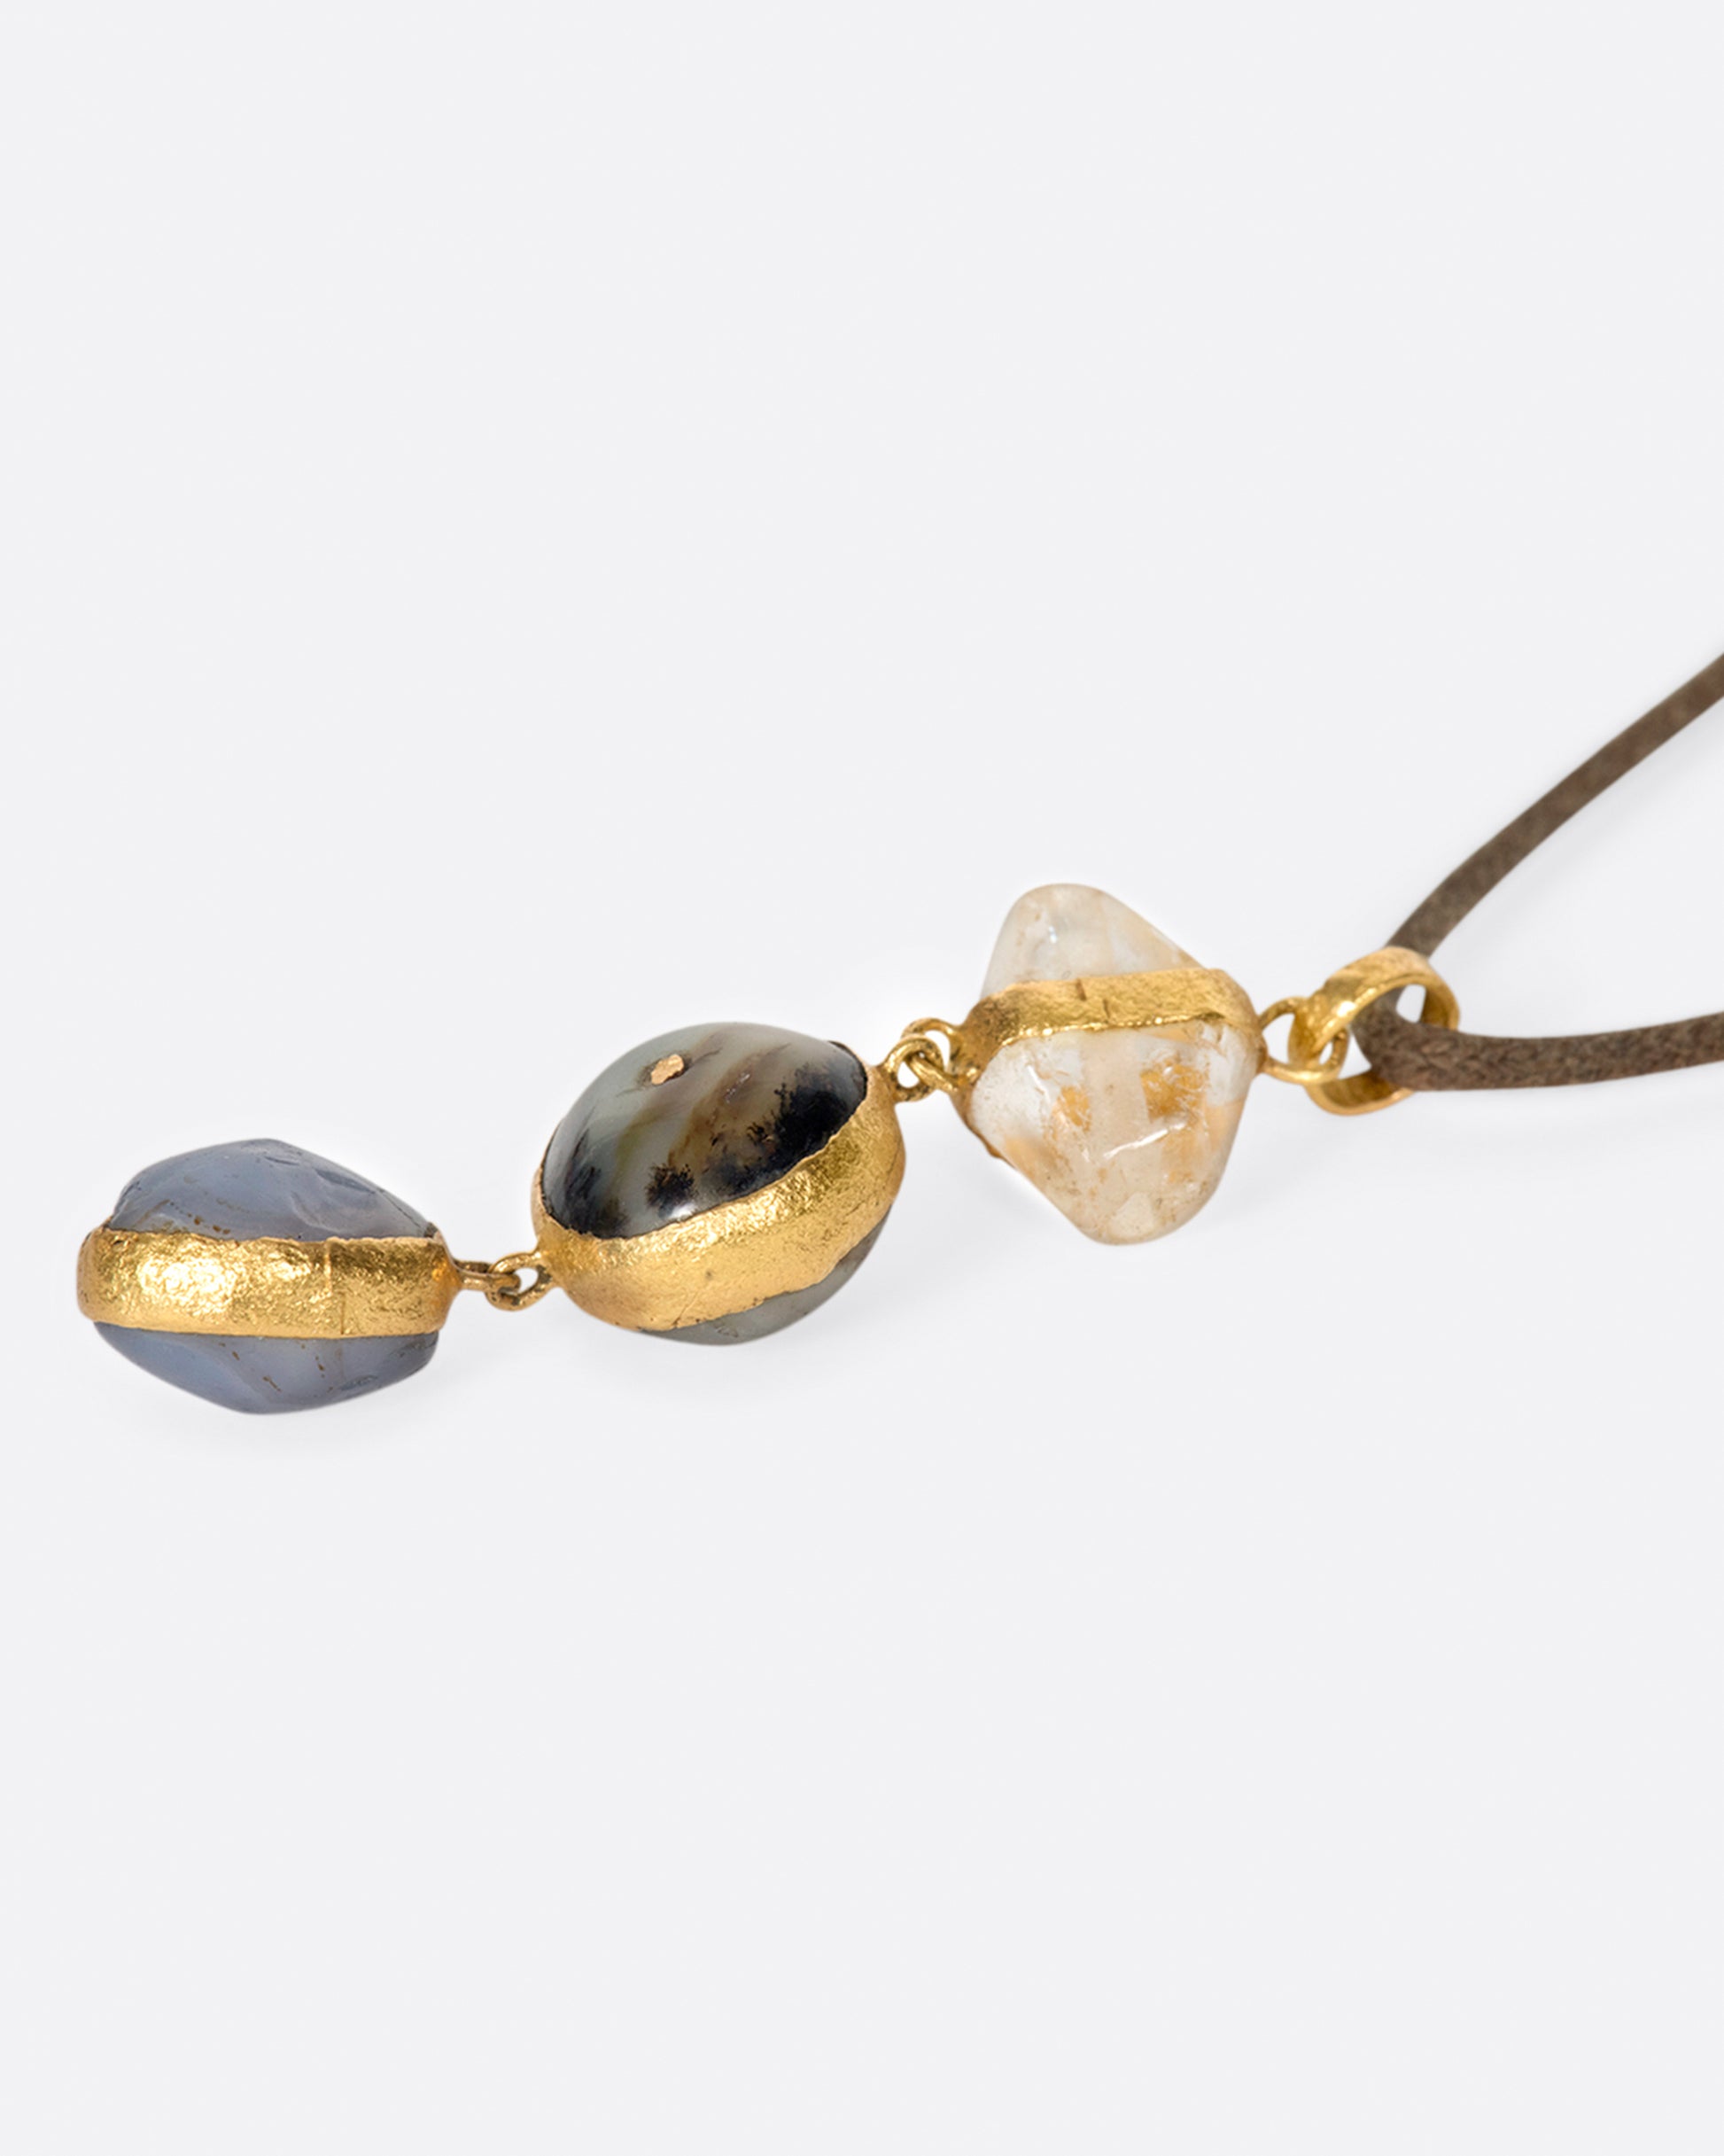 A high karat gold pendant with quartz, labradorite, and sapphire components.